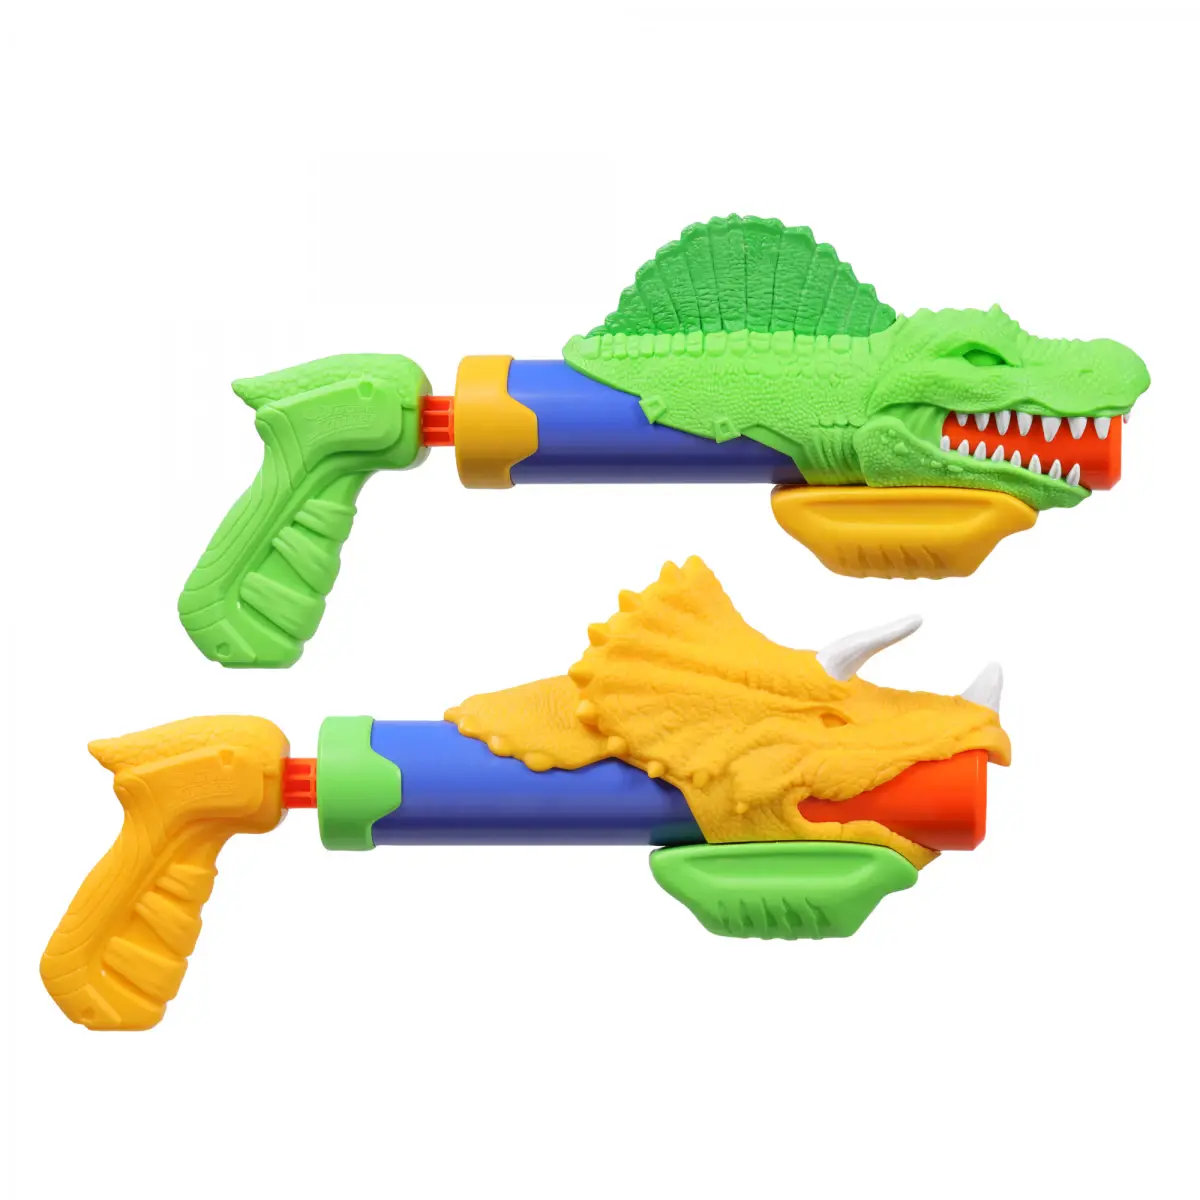 Nerf Super Soaker DinoSquad Dino Splashers, 2 Water Blasters, 2 Dinosaur Designs, Water Toys for 6Y+